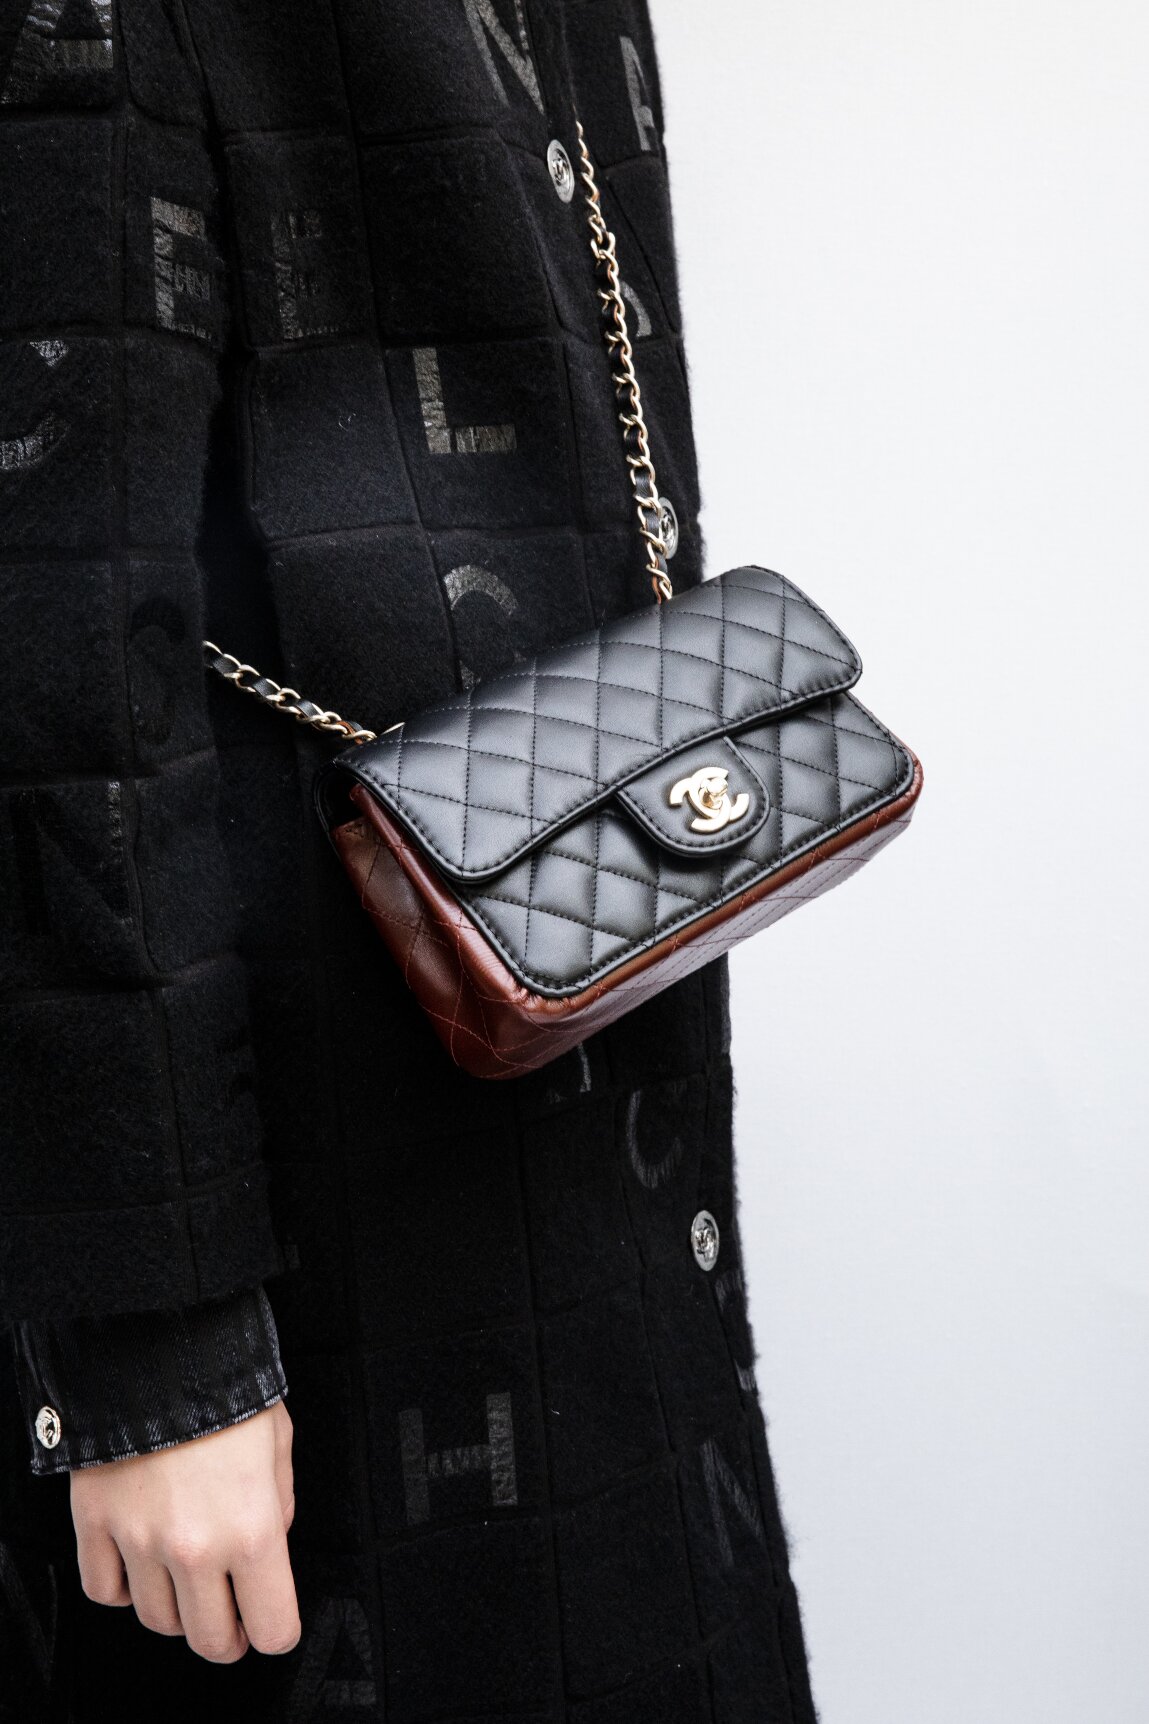 Chanel Handbag Detail 2020